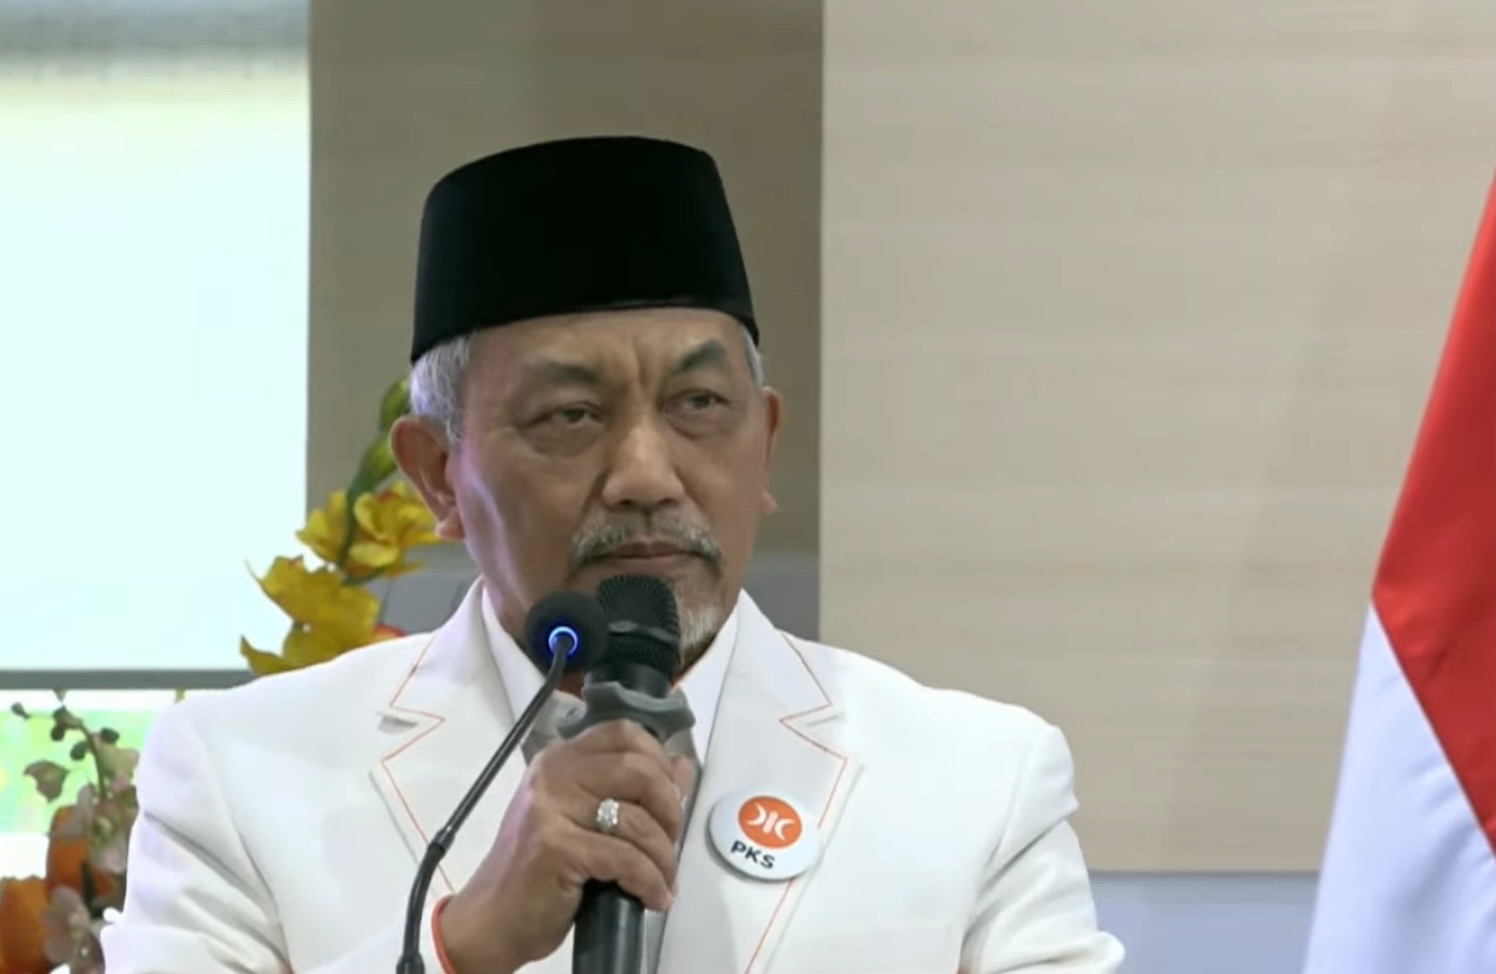 Singgung Kasus Pulau Rempang, PKS Akan Ambil Langkah Advokasi